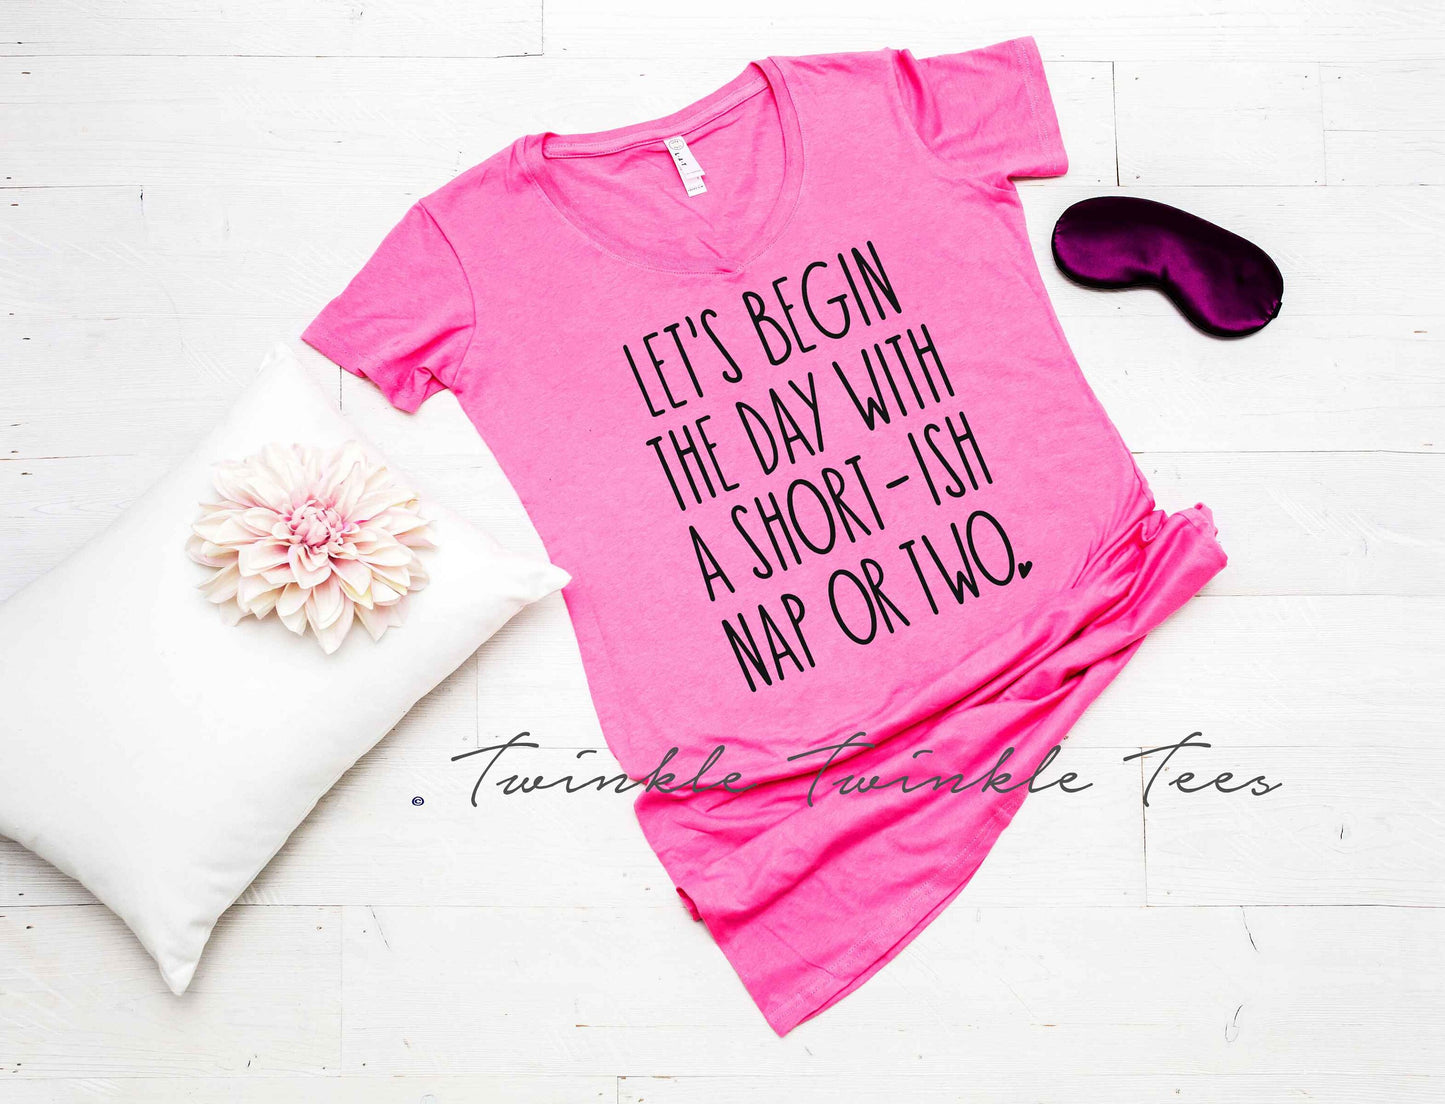 Let's Begin the Day with a Short-ish Nap or Two V-neck Night Shirt - sleep shirt - night shirt - women's pajamas - lounge shirt